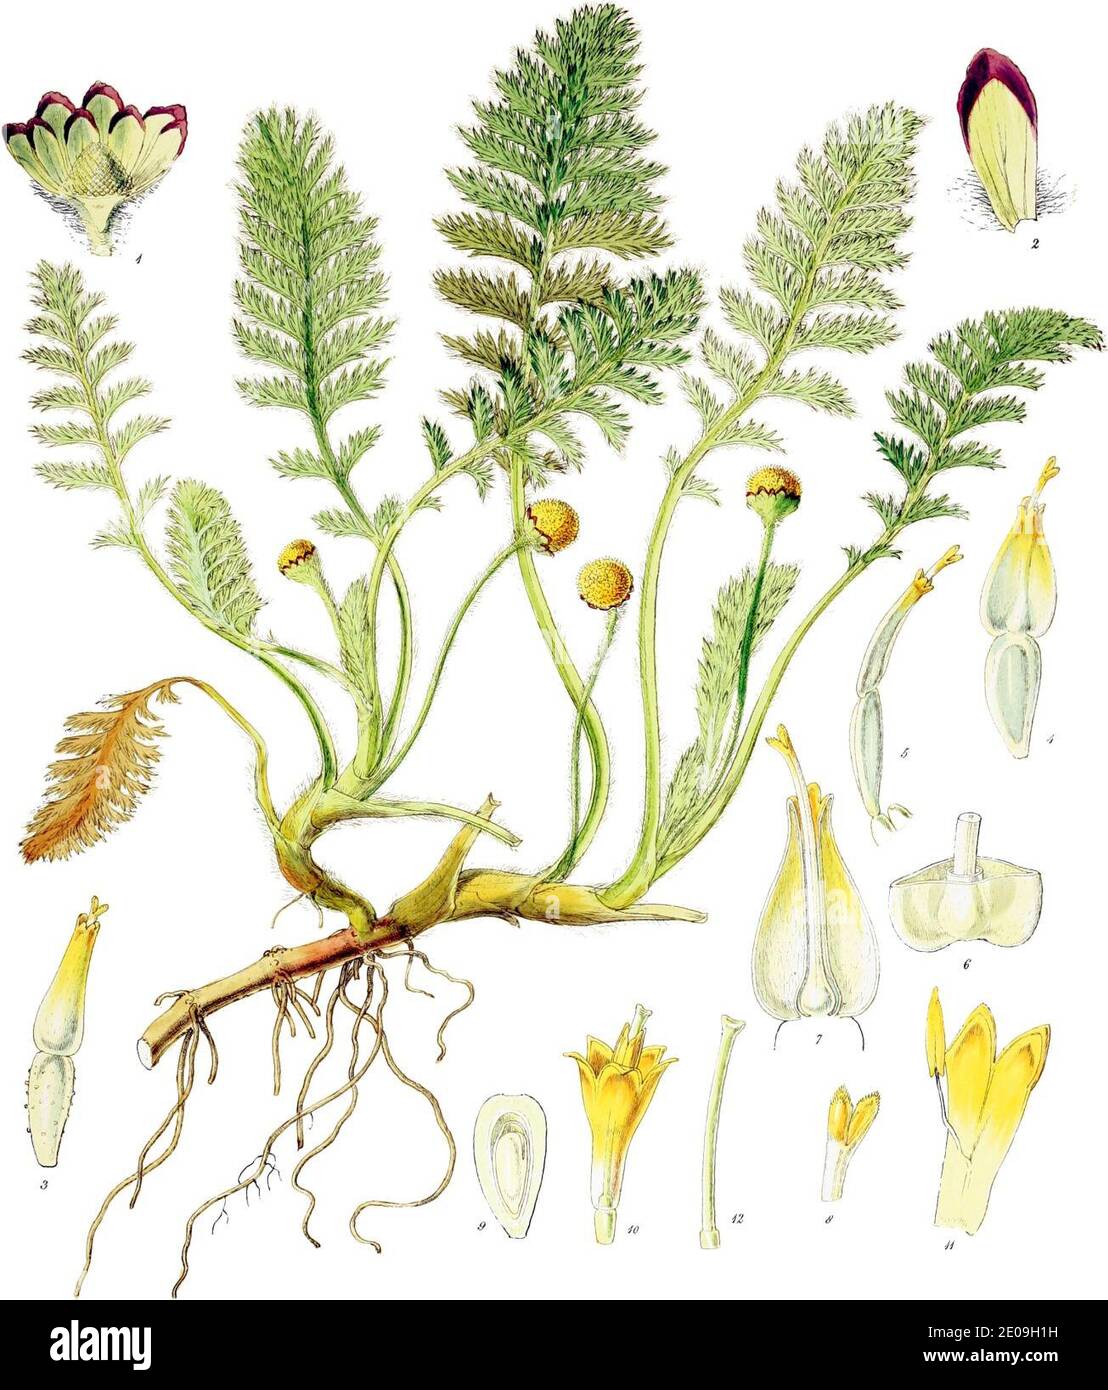 Leptinella plumosa-Botany of Antarctica-PL020-0045. Stock Photo